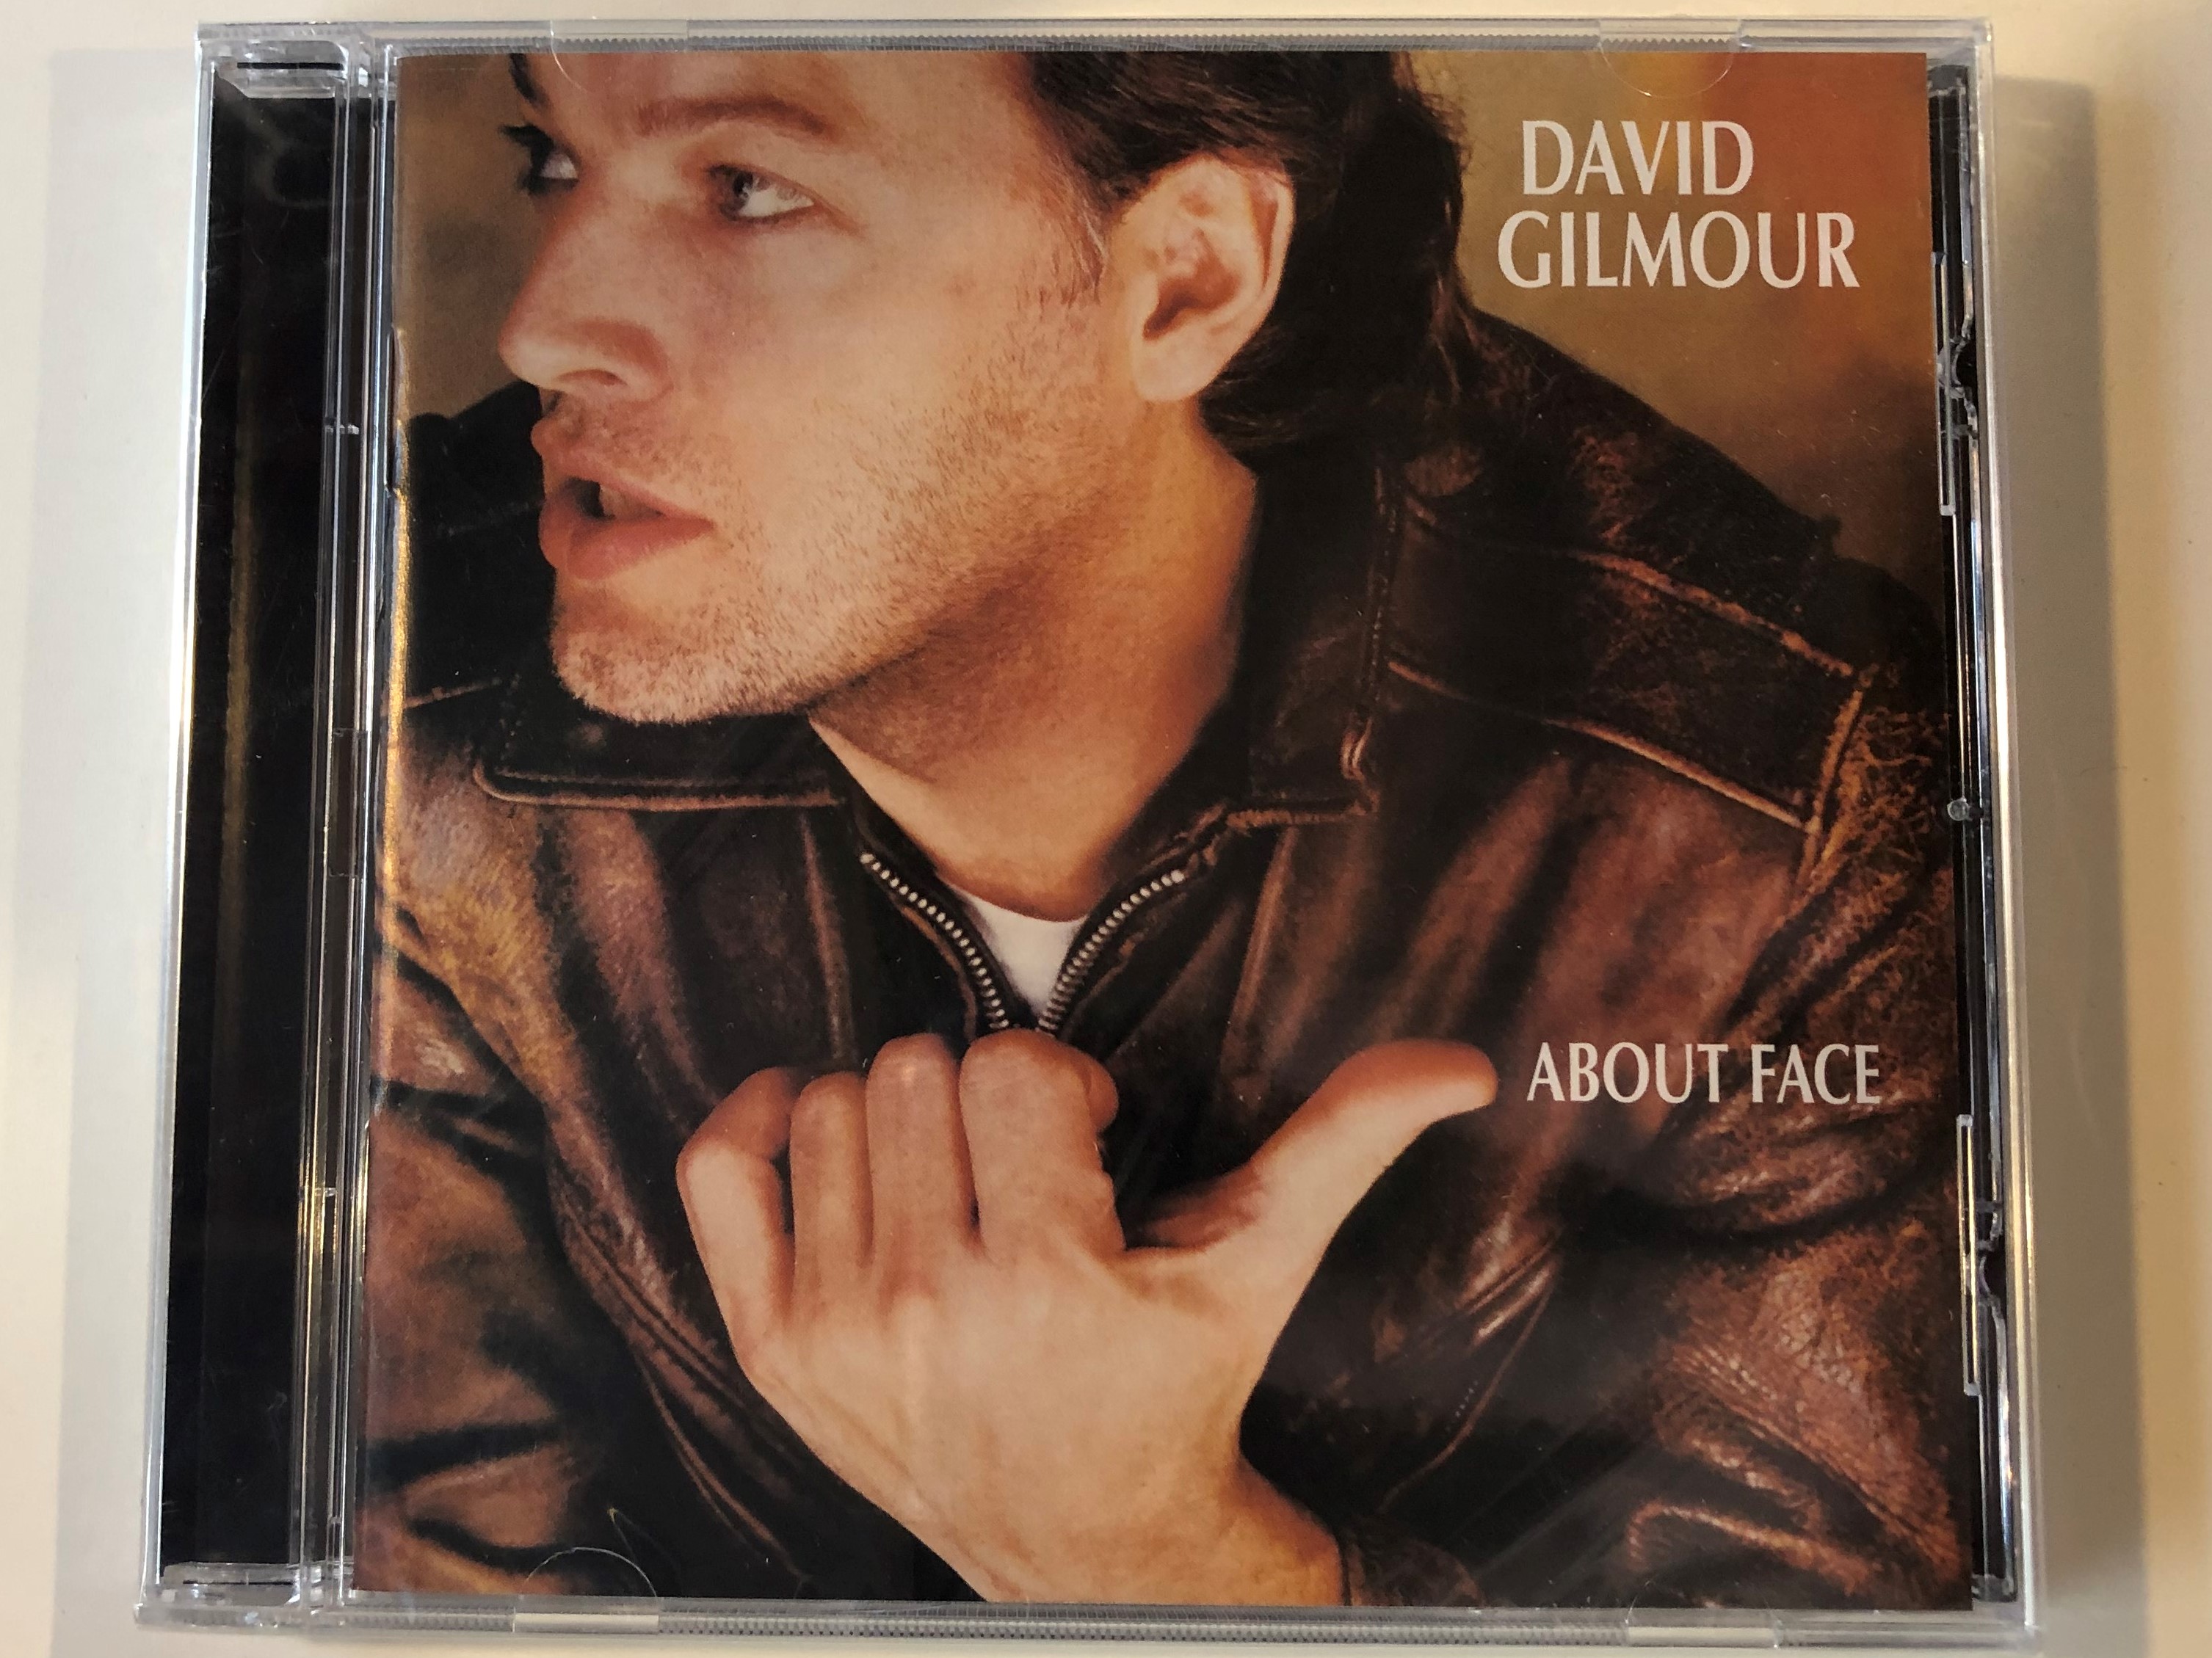 david-gilmour-about-face-david-gilmour-music-ltd.-audio-cd-2006-094637084229-1-.jpg